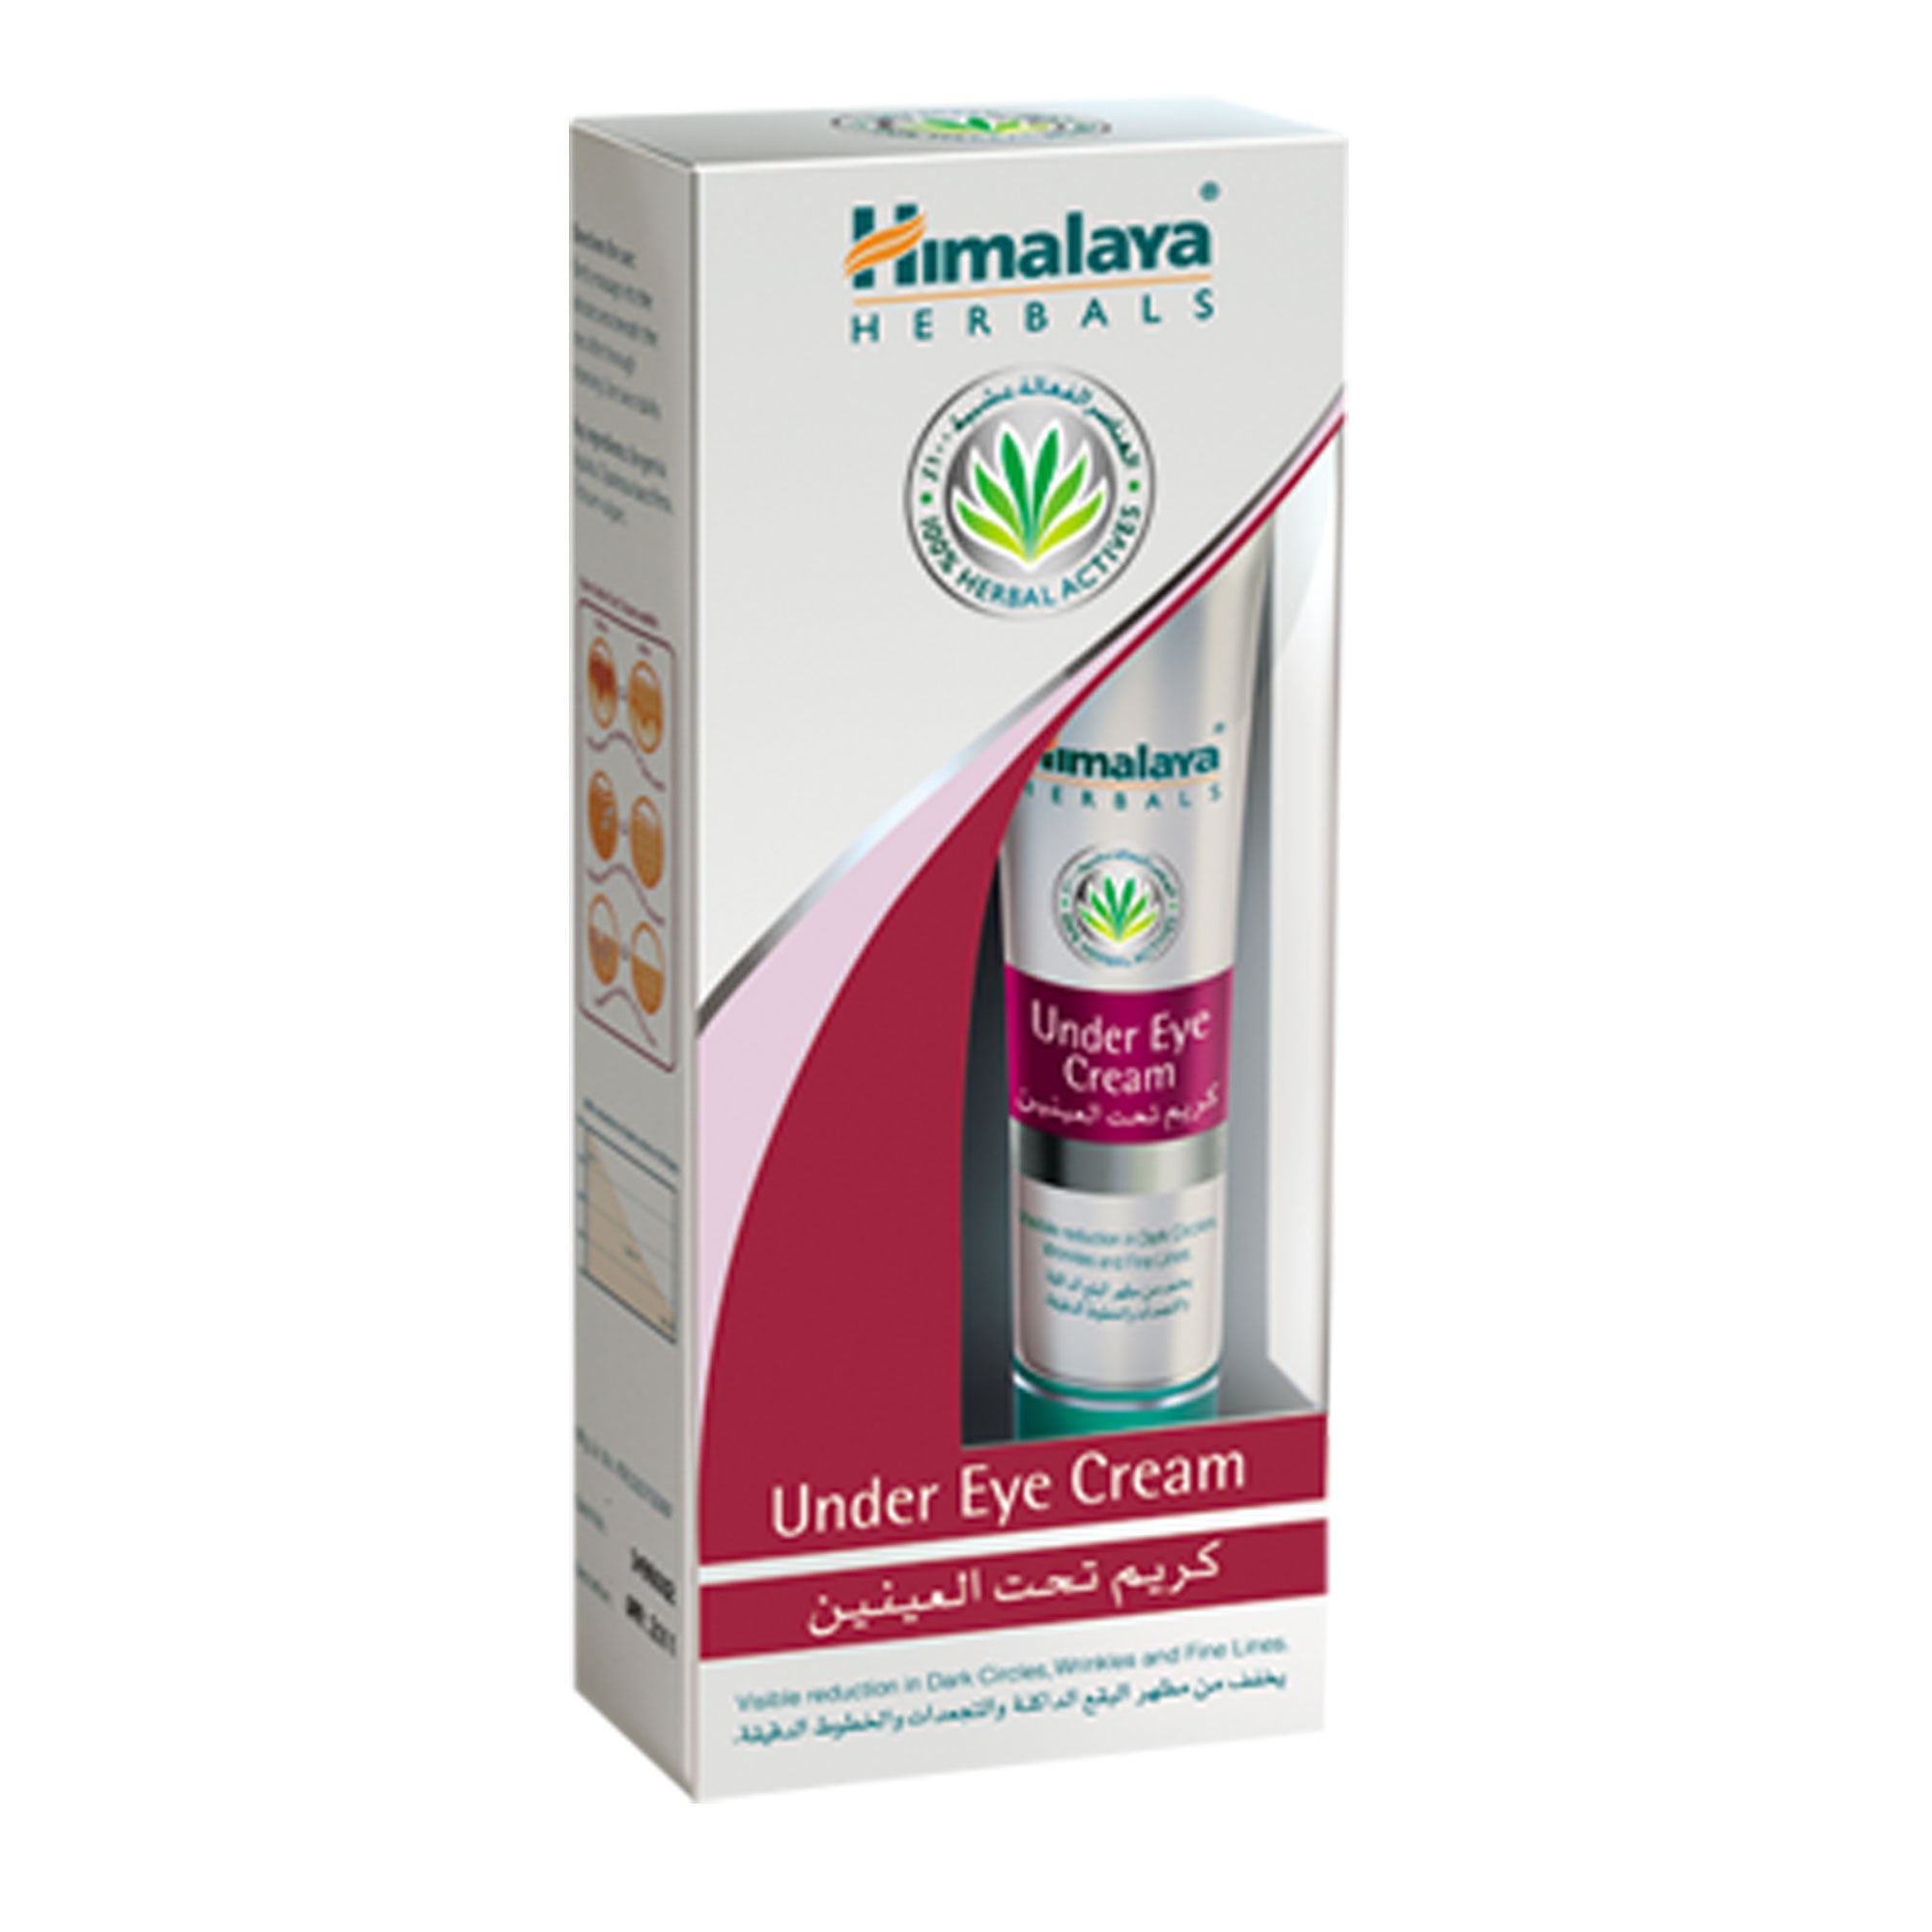 Himalaya Under Eye Cream 15ml - Reduces Appearance of Dark Circles